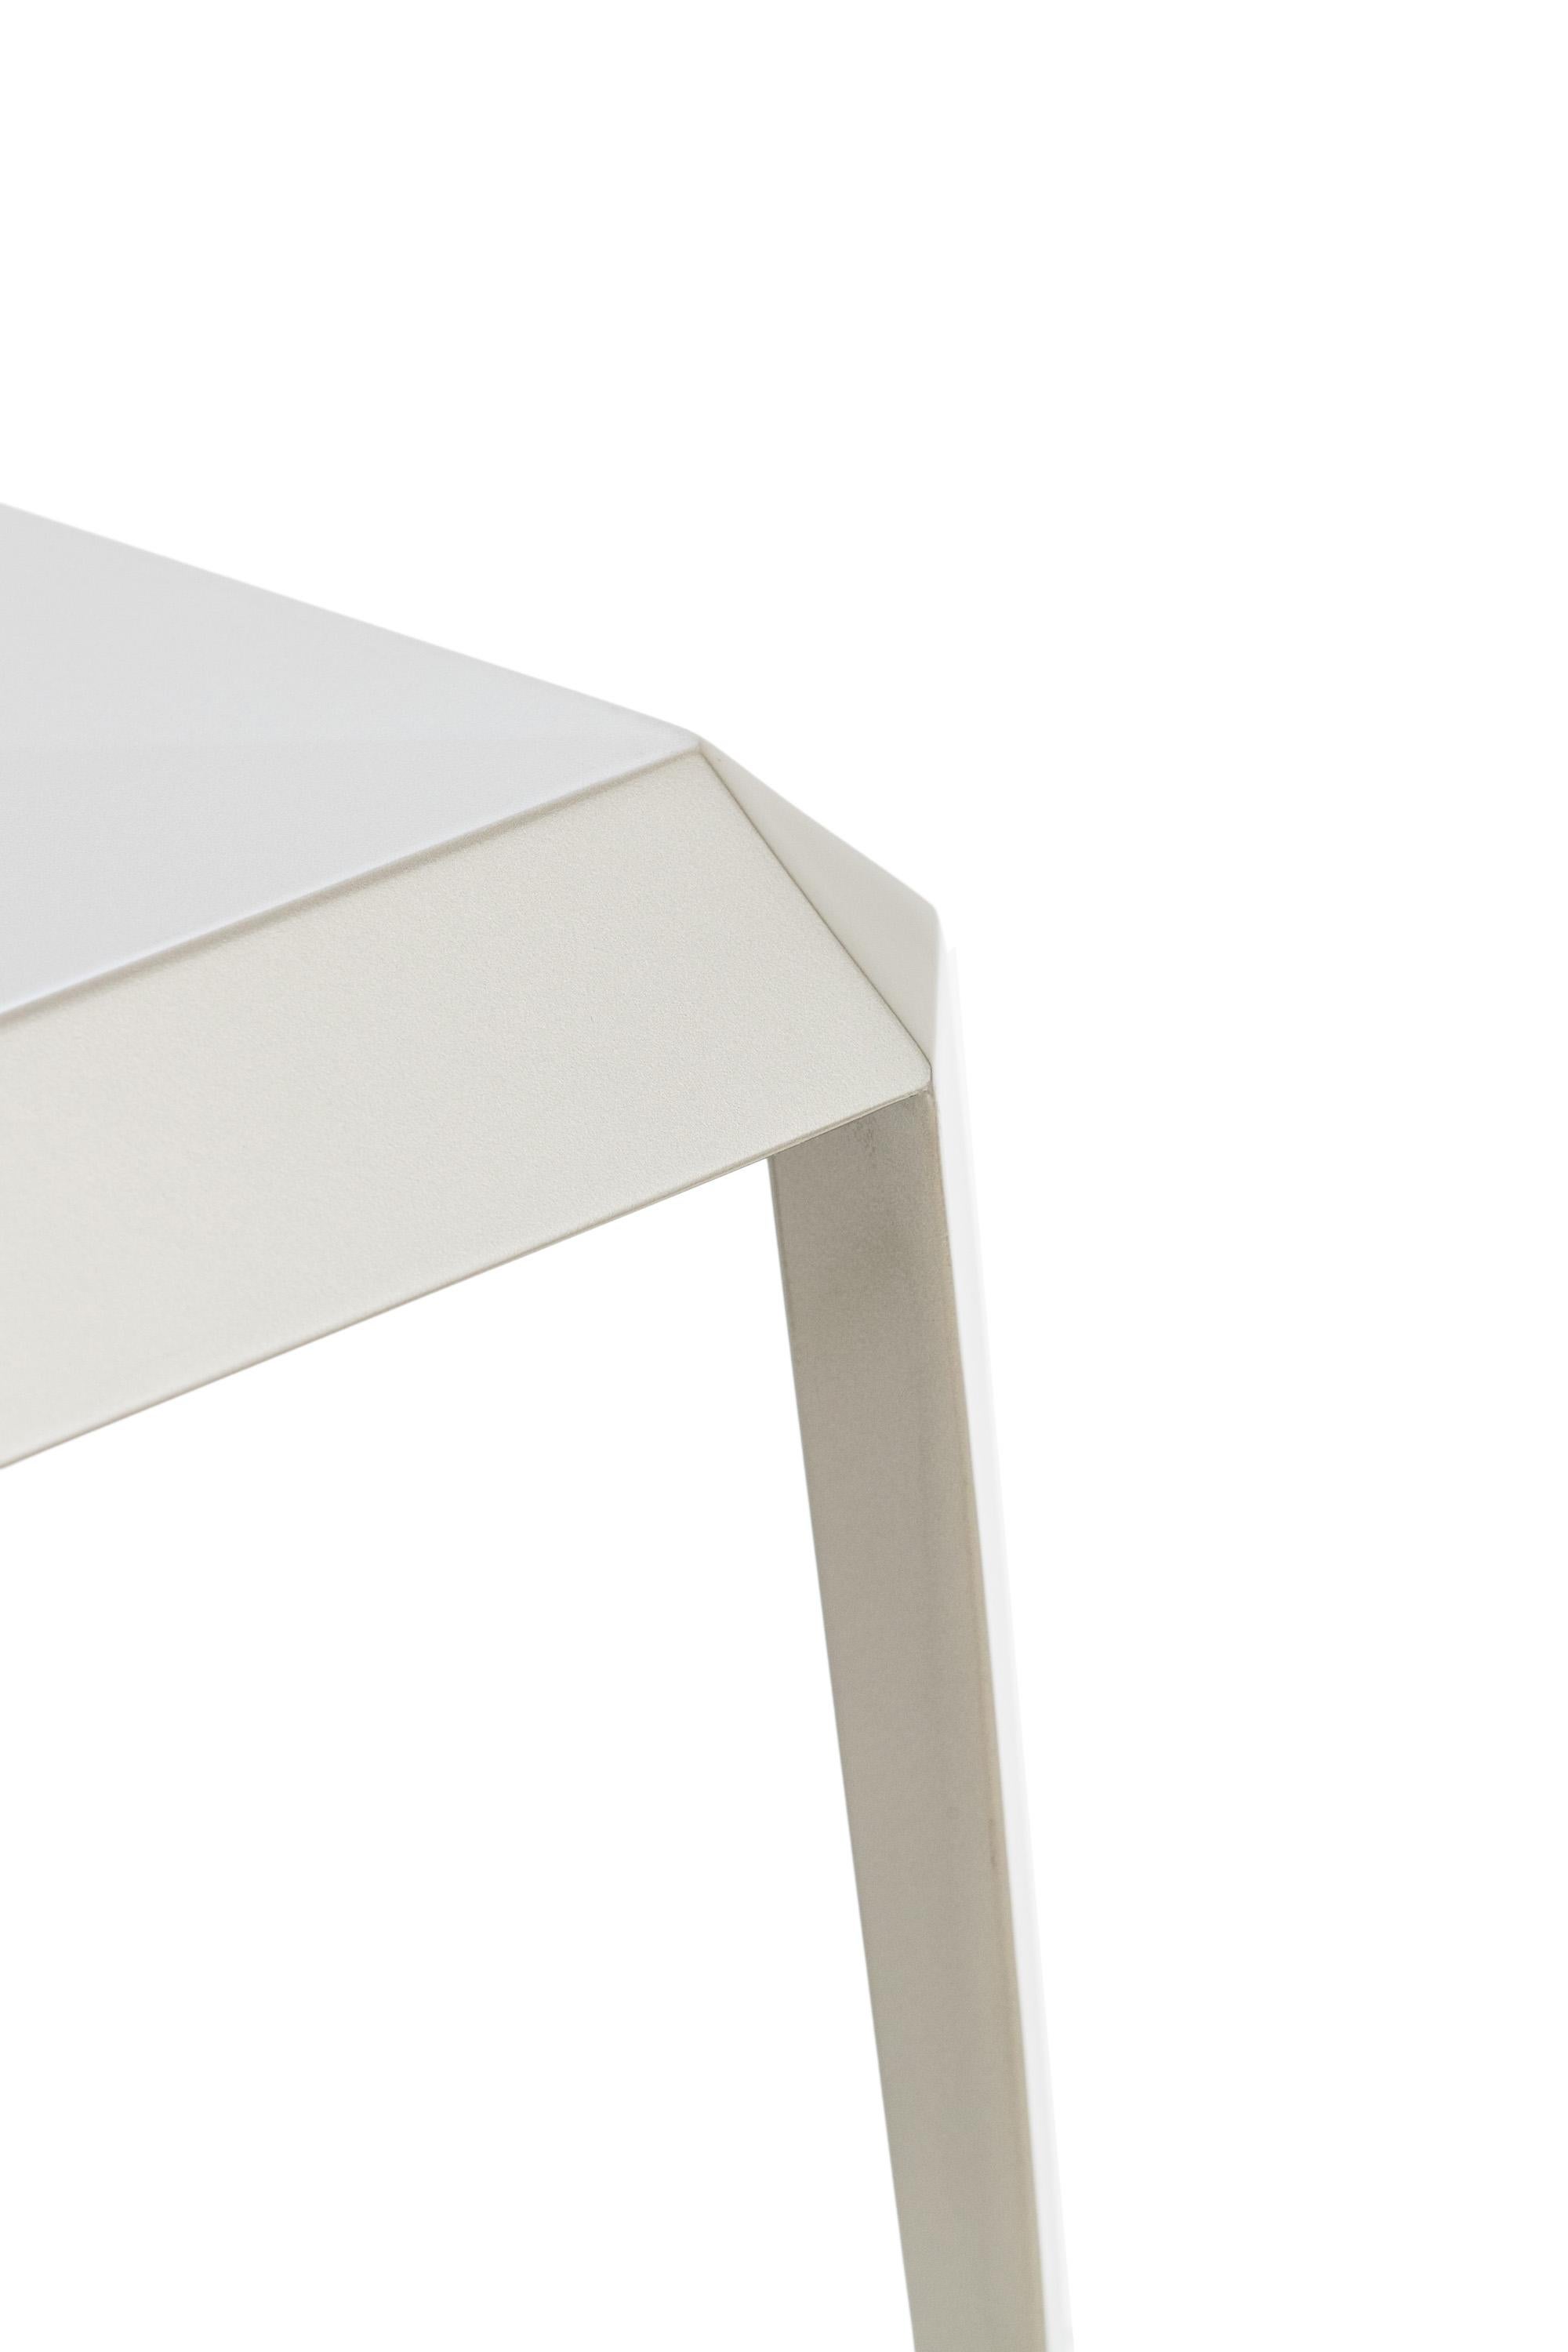 Contemporary Lingotto Chair in Aluminium by Altreforme For Sale 1